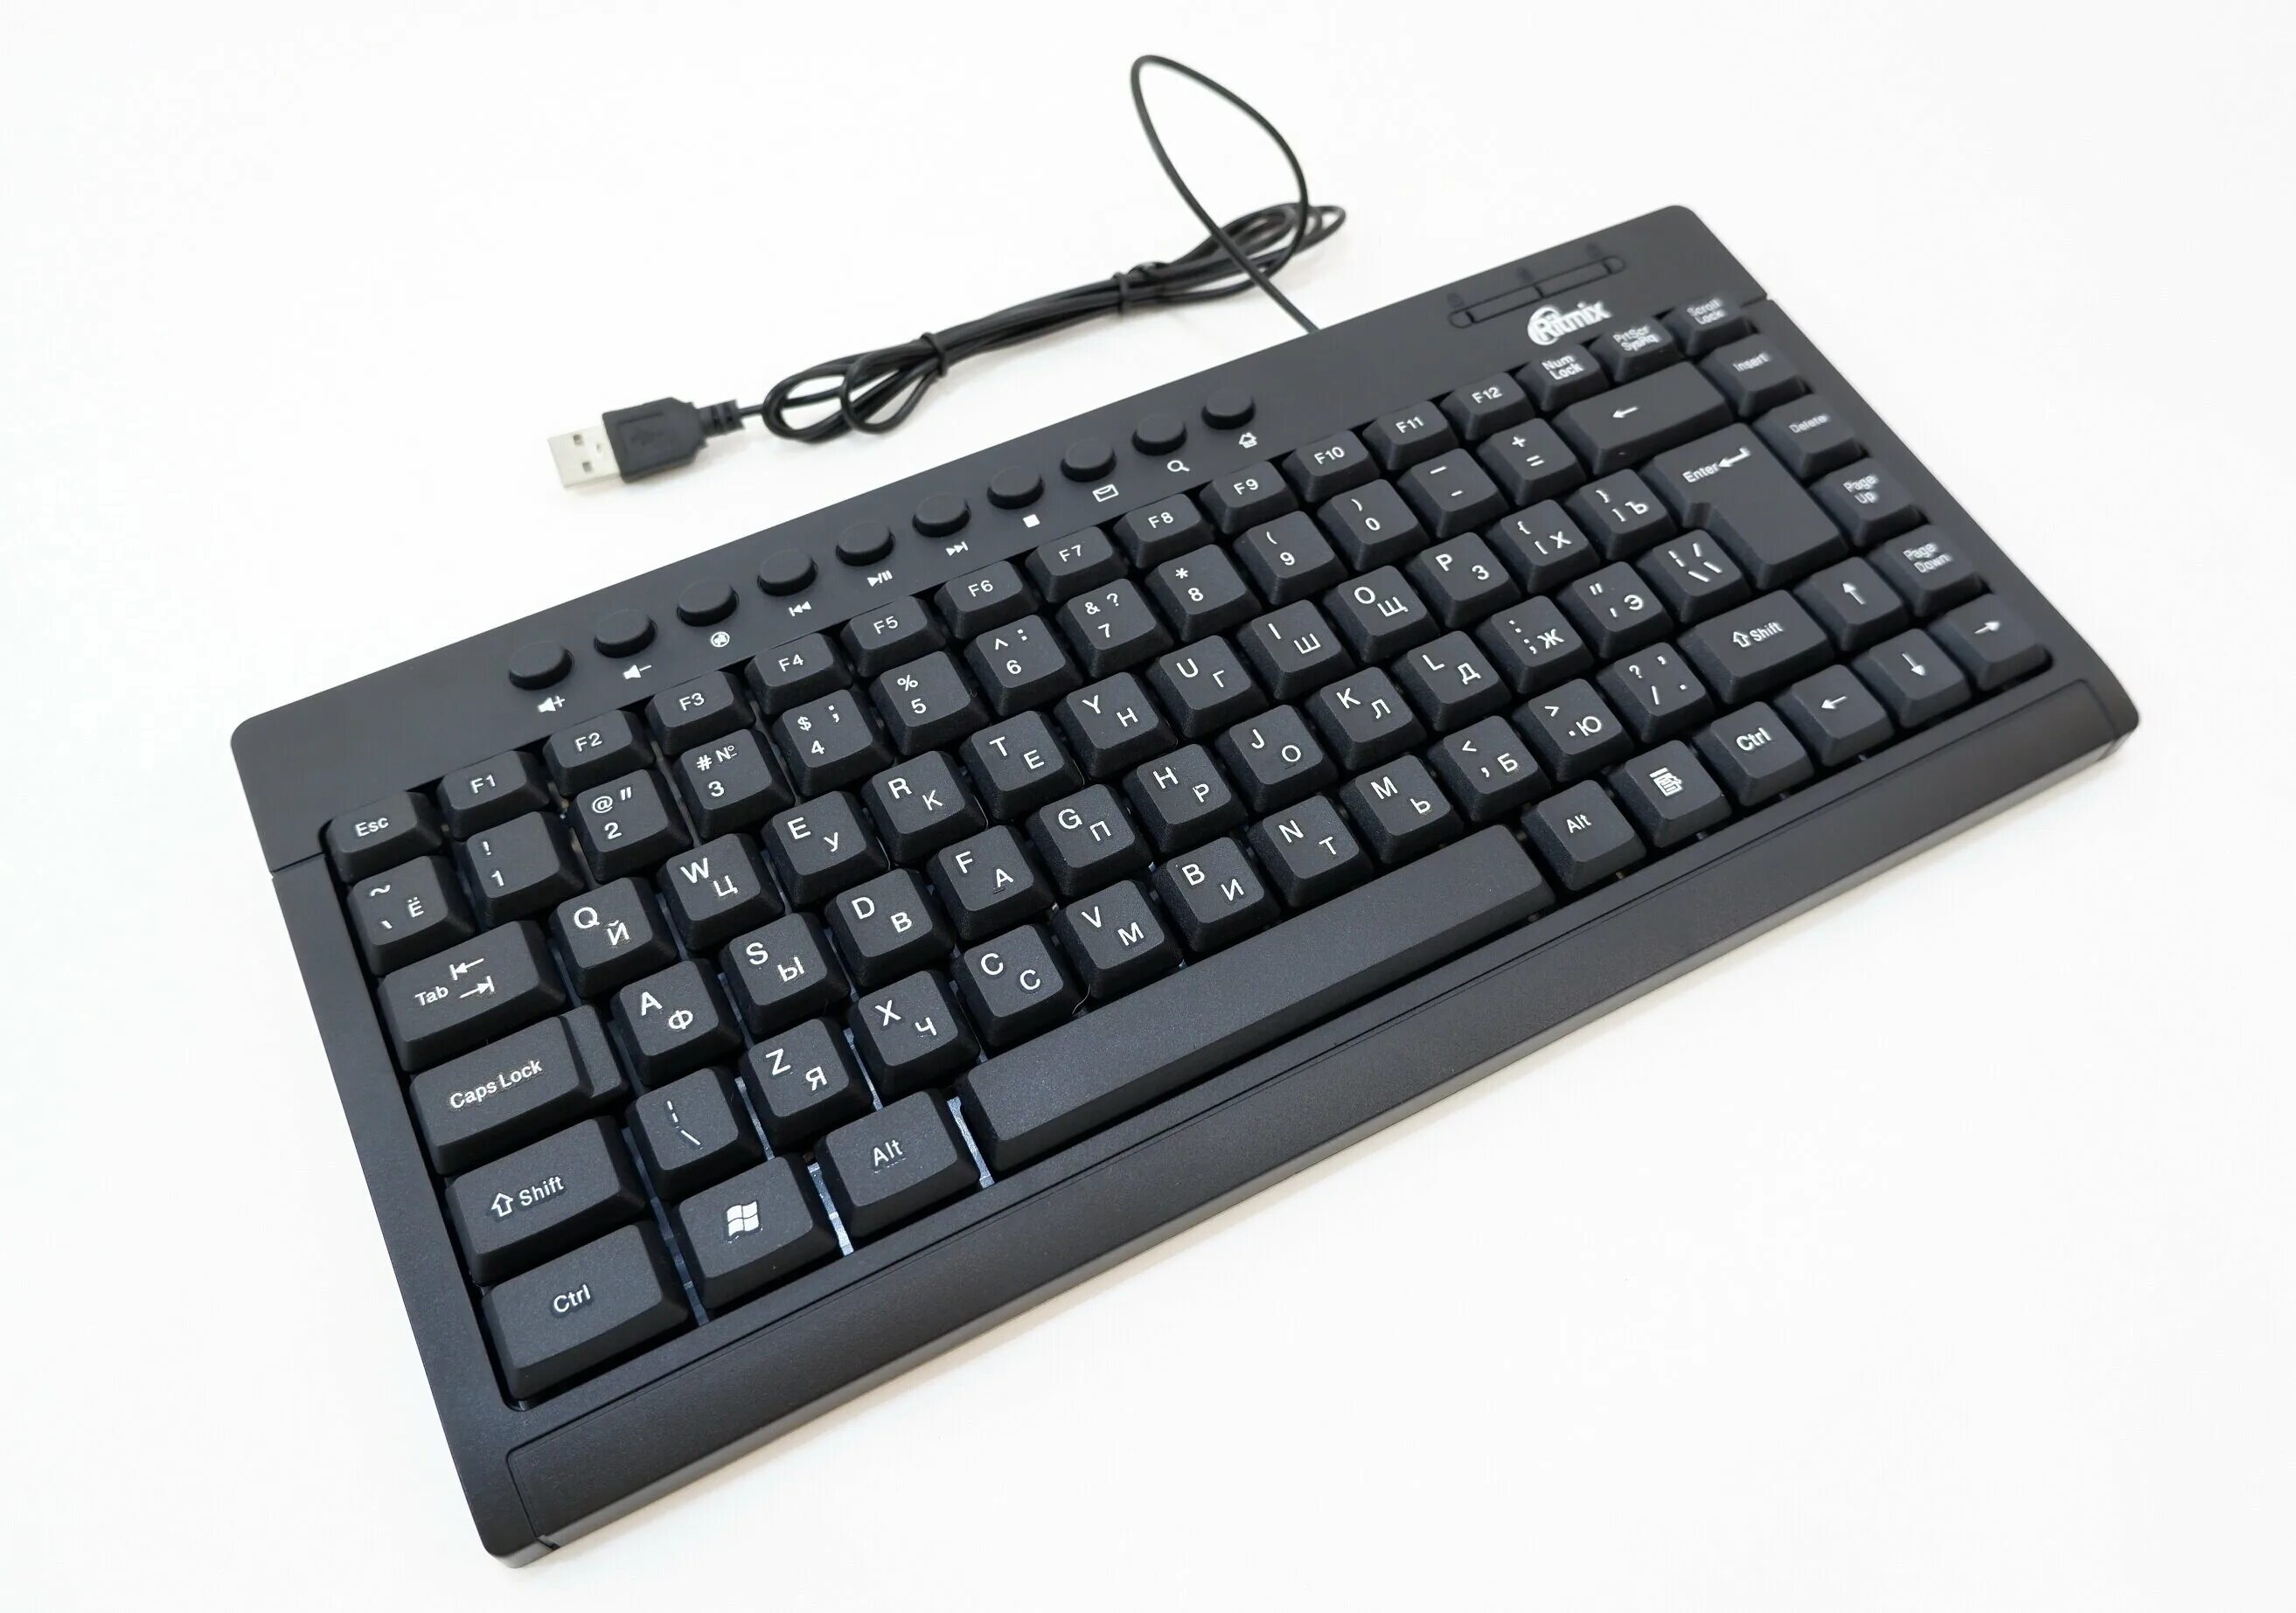 Клавиатура Ritmix RKB-104. Клавиатура Ritmix RKB-104 Black USB. Клавиатура Ritmix RKB-100, черная, USB (1/20). Ritmix клавиатура Ritmix RKB-104 компактная. Клавиатура компакт